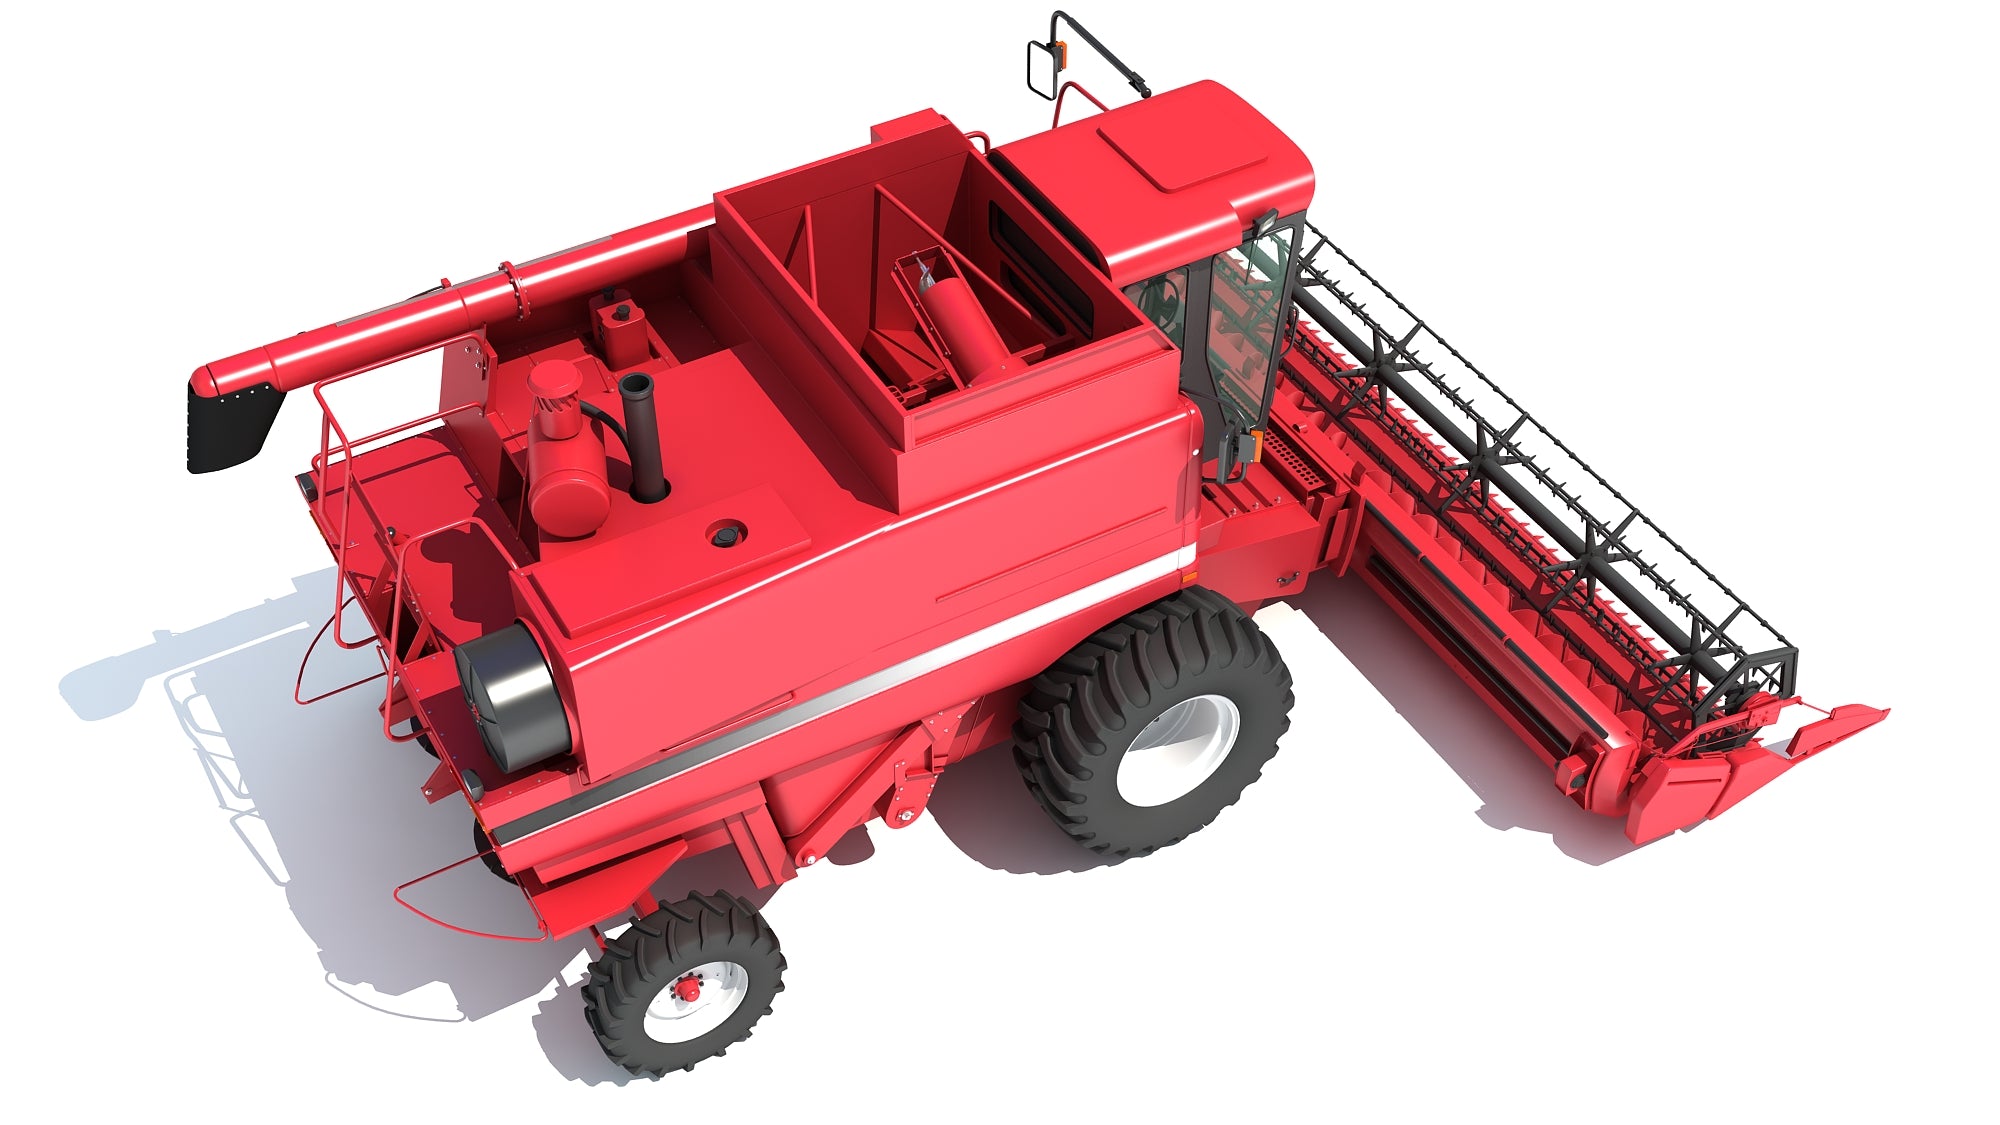 3D Combine Harvester model